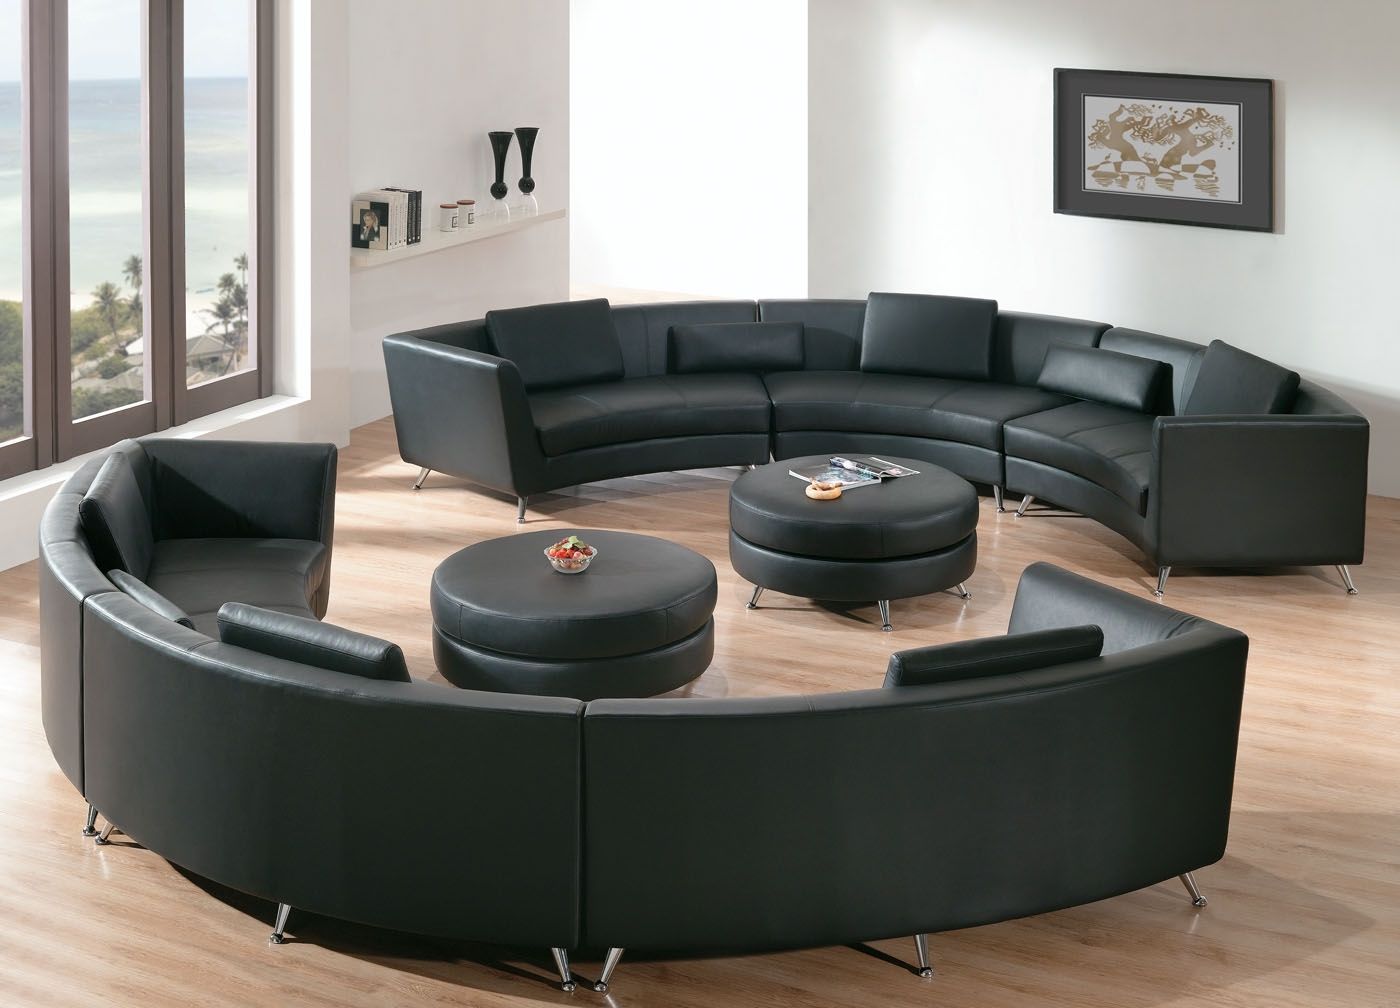 Round Sofa Chair Living Room Furniture Raya Furniture With Regard To Round Sofa Chair Living Room Furniture (View 7 of 15)